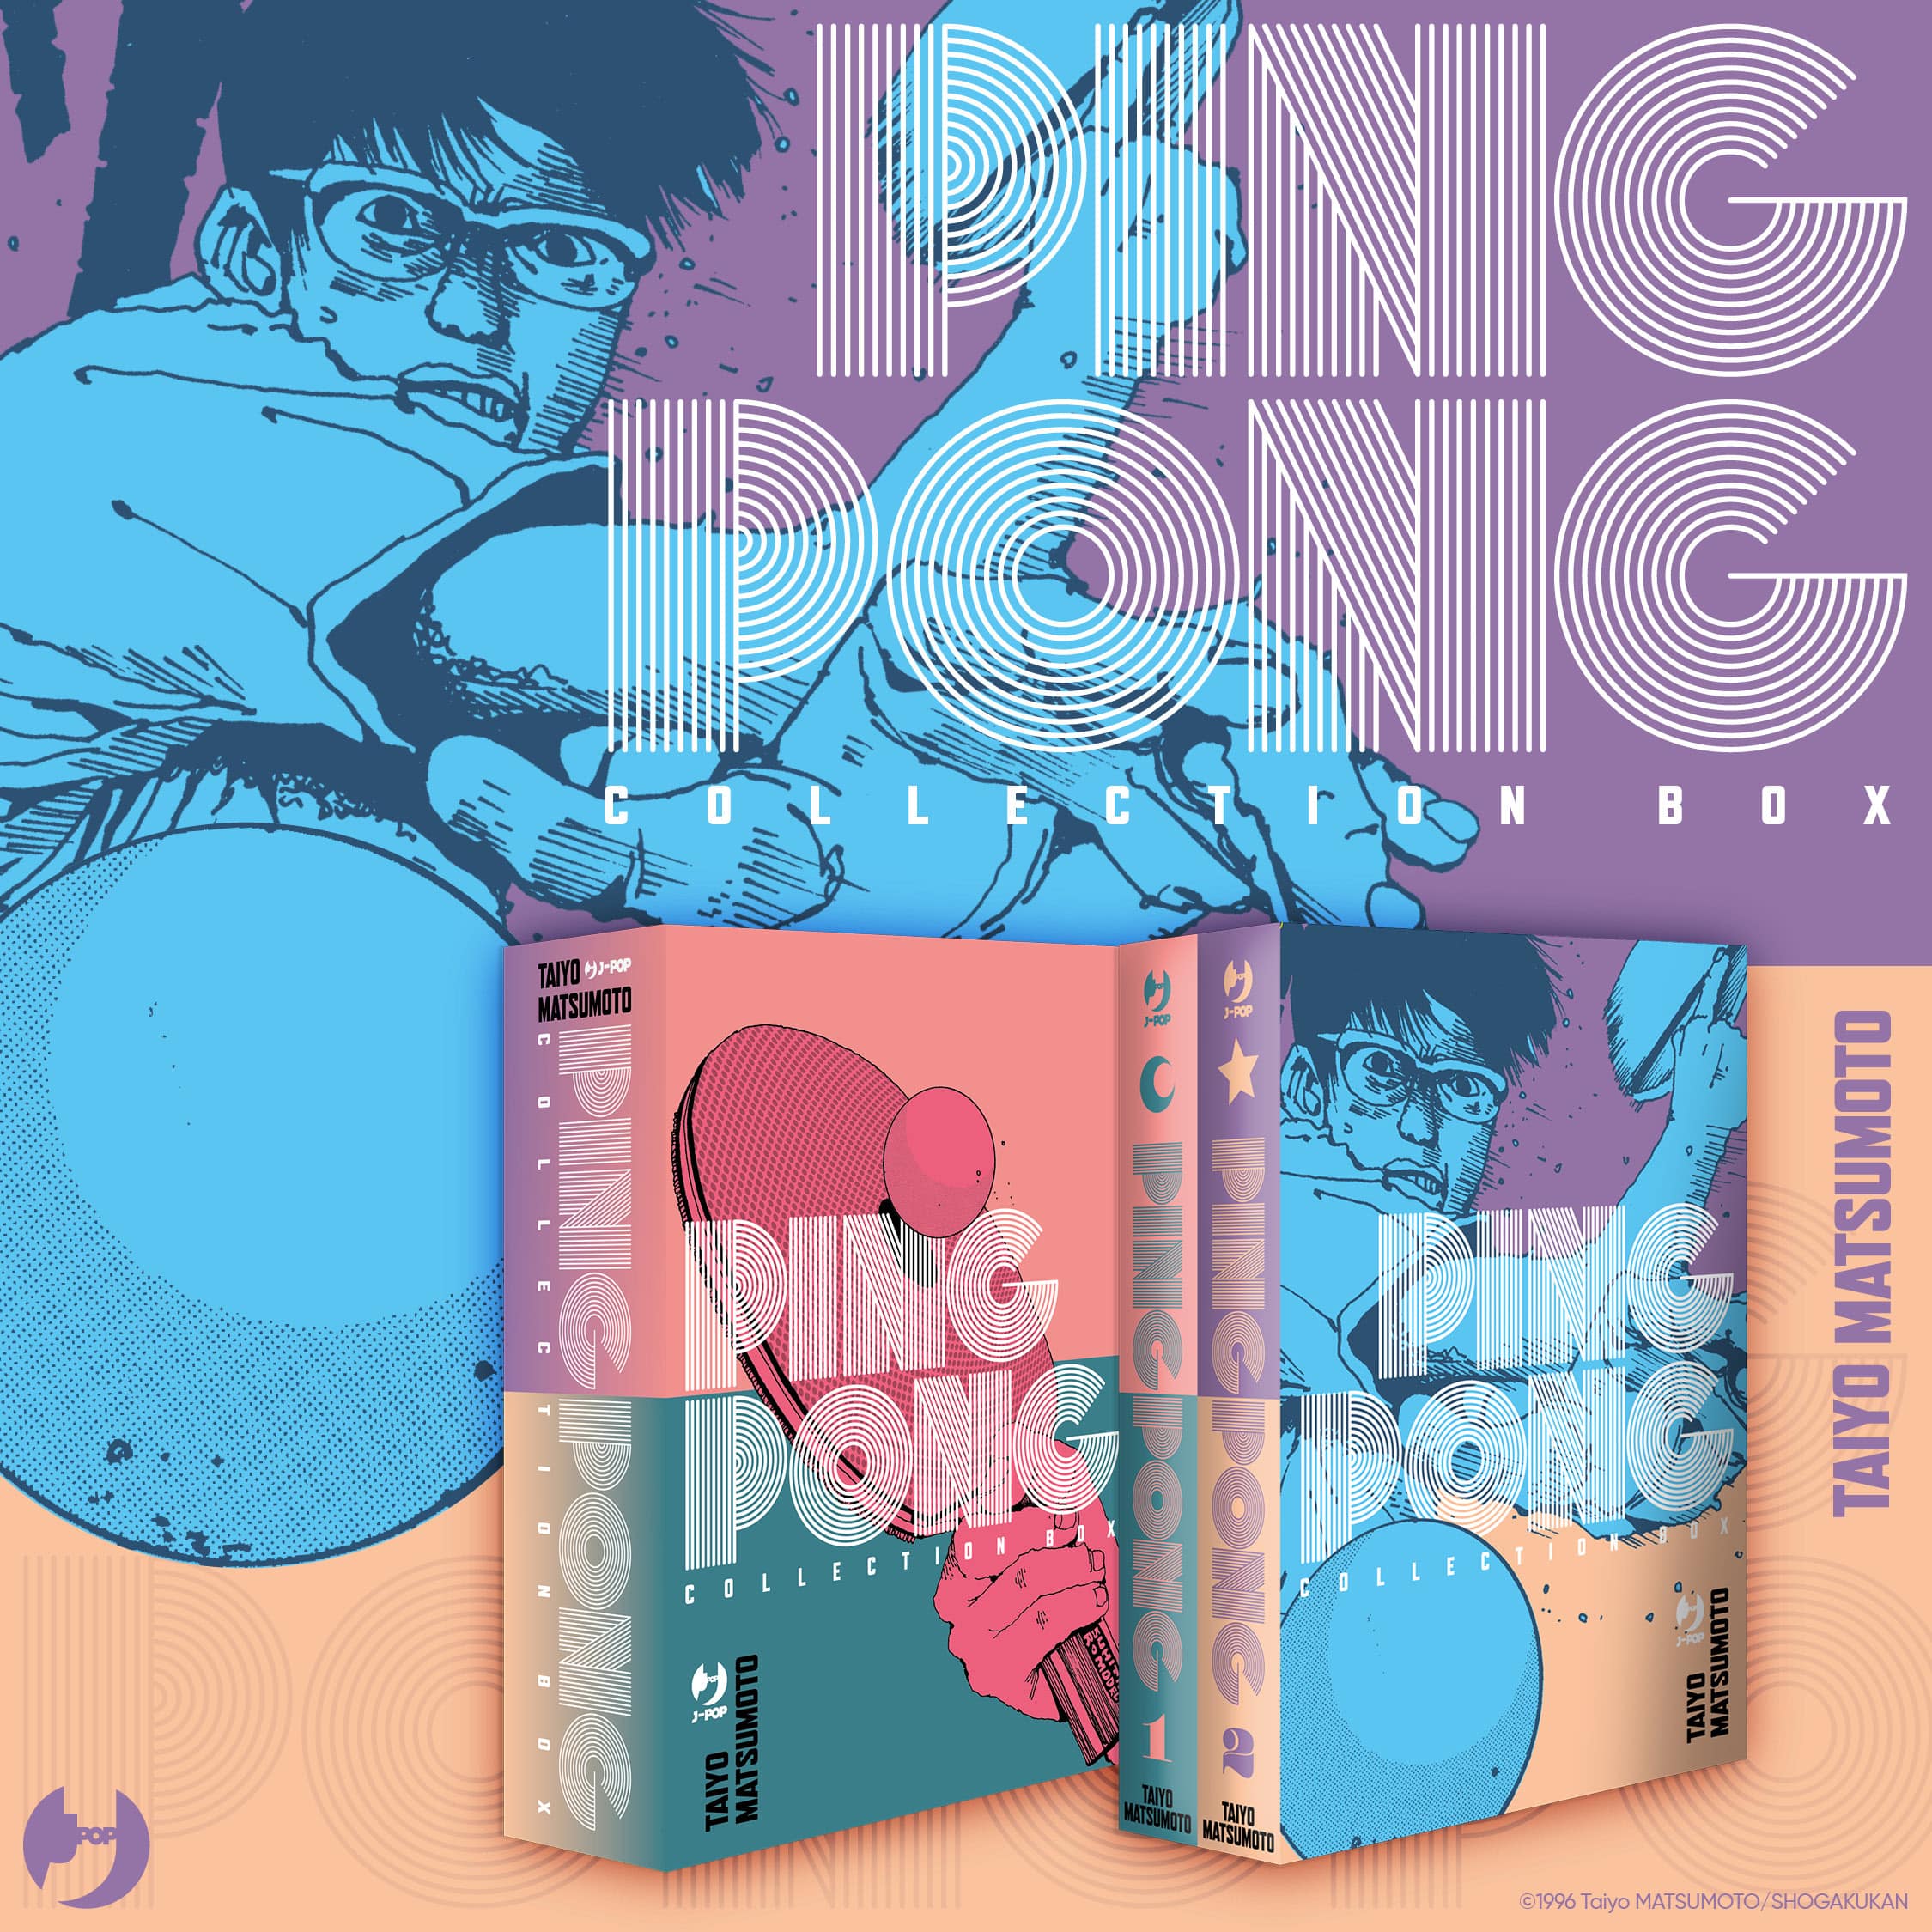 Taiyo Matsumoto, Ping Pong, J-Pop, cofanetto con due volumi, 550 pagine cad., 36 euro